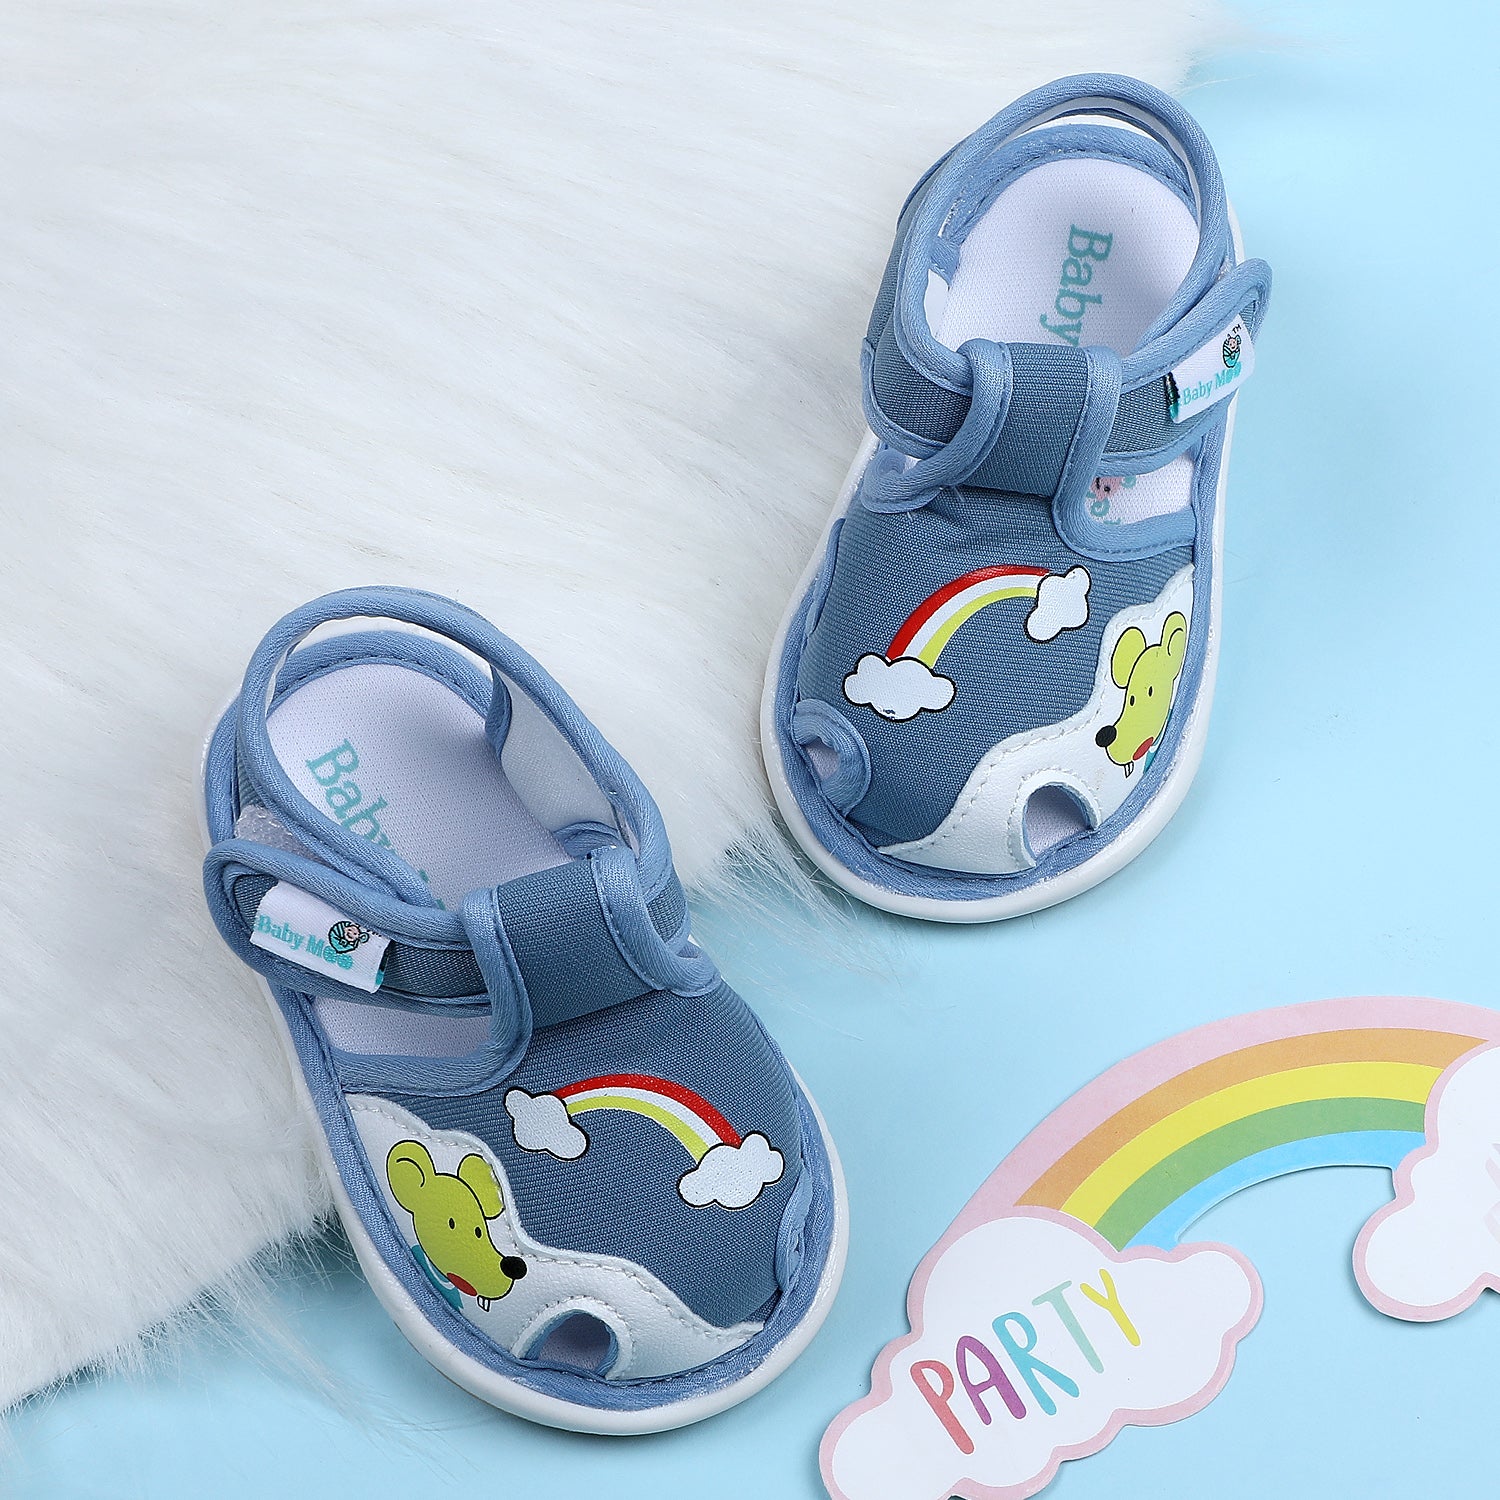 Baby Moo Rainbow Chu-Chu Sound Breathable Anti-Skid Sandals - Blue